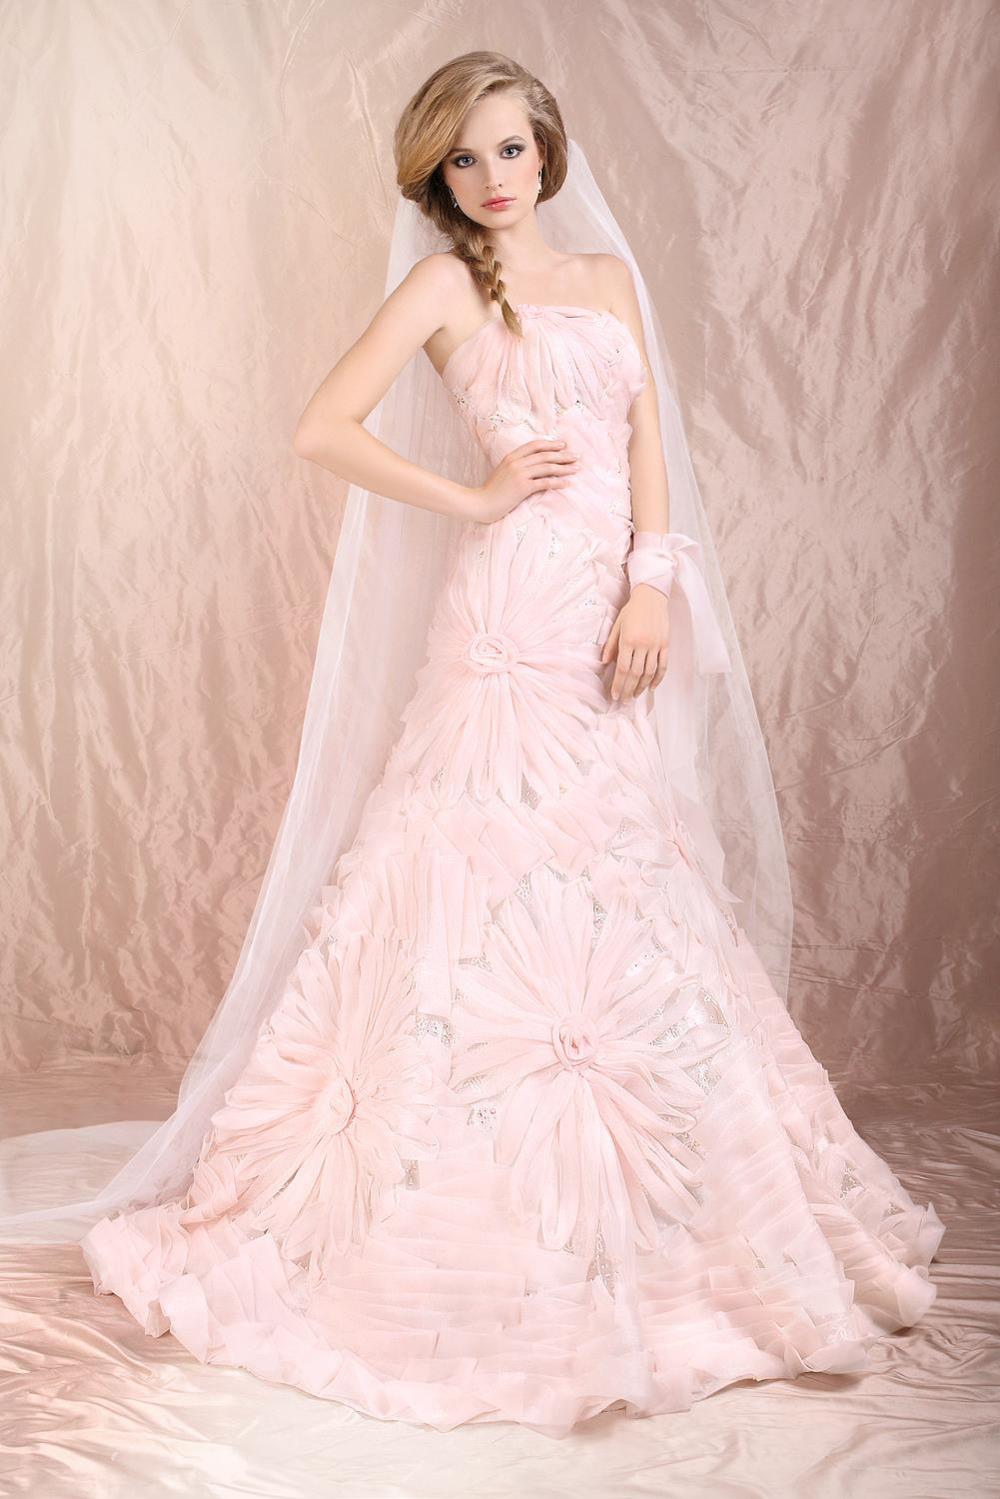 Blush Wedding Dress | Dressed Up Girl